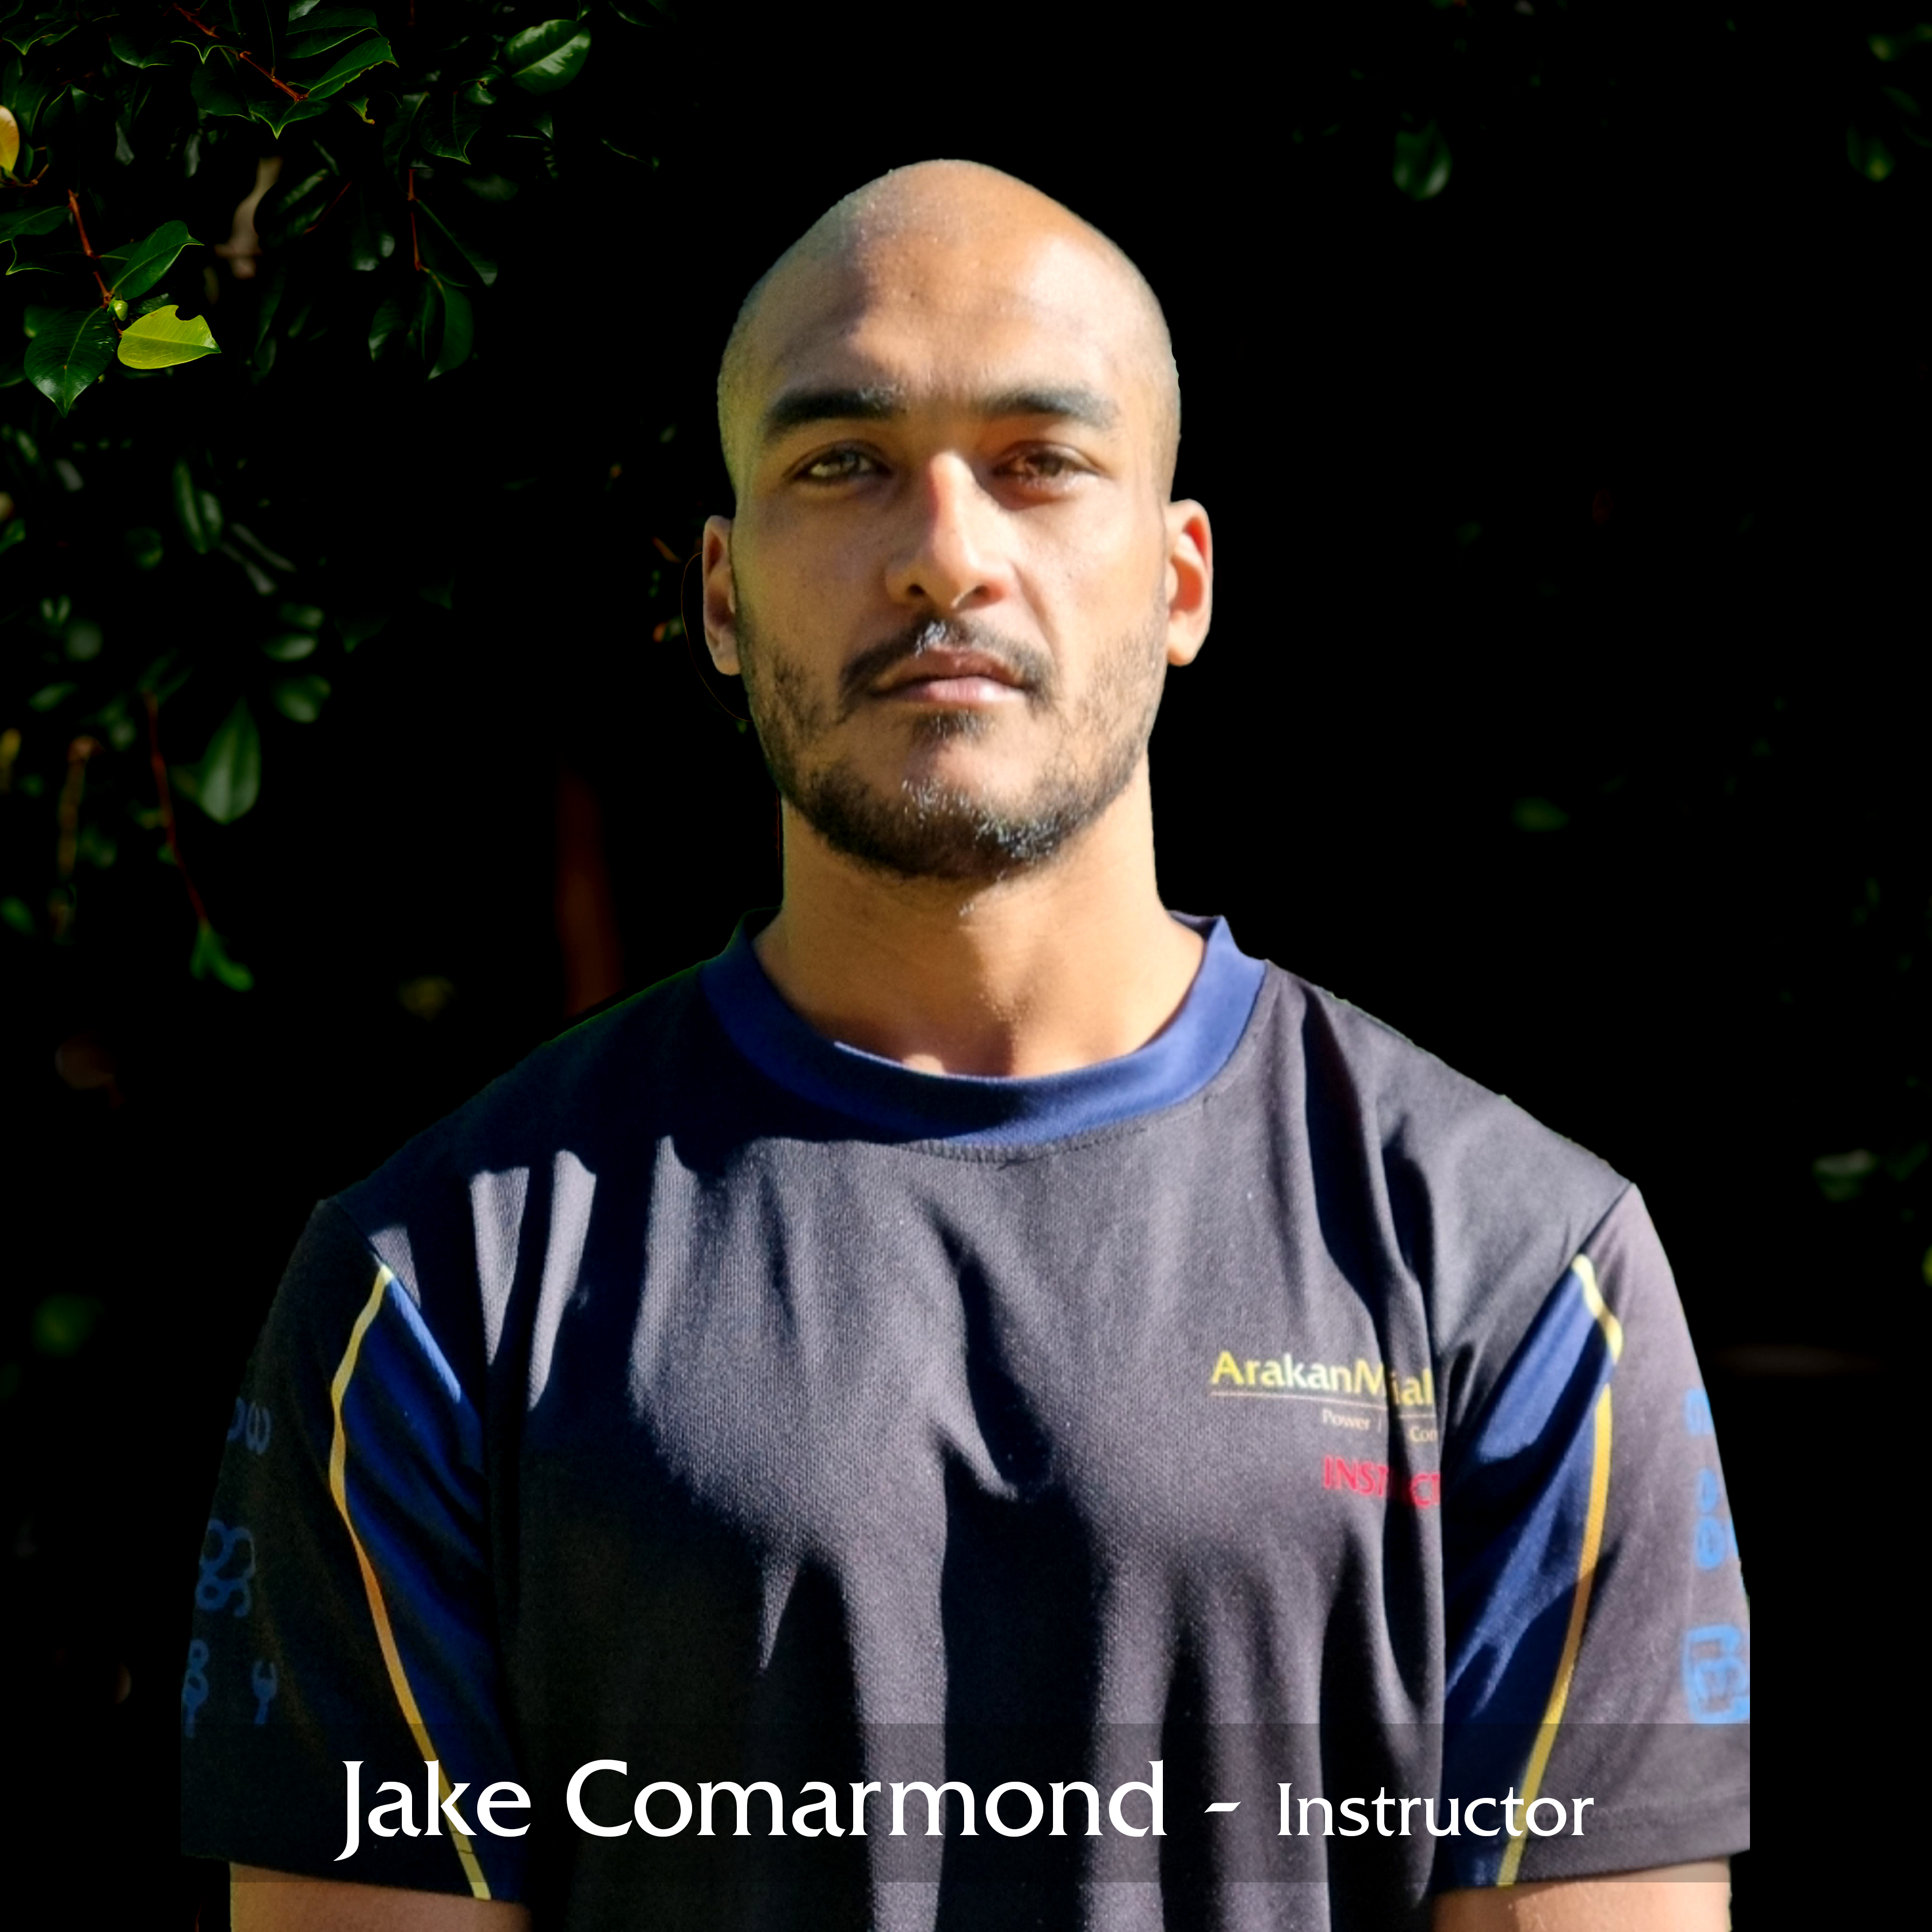 Jake Comarmond